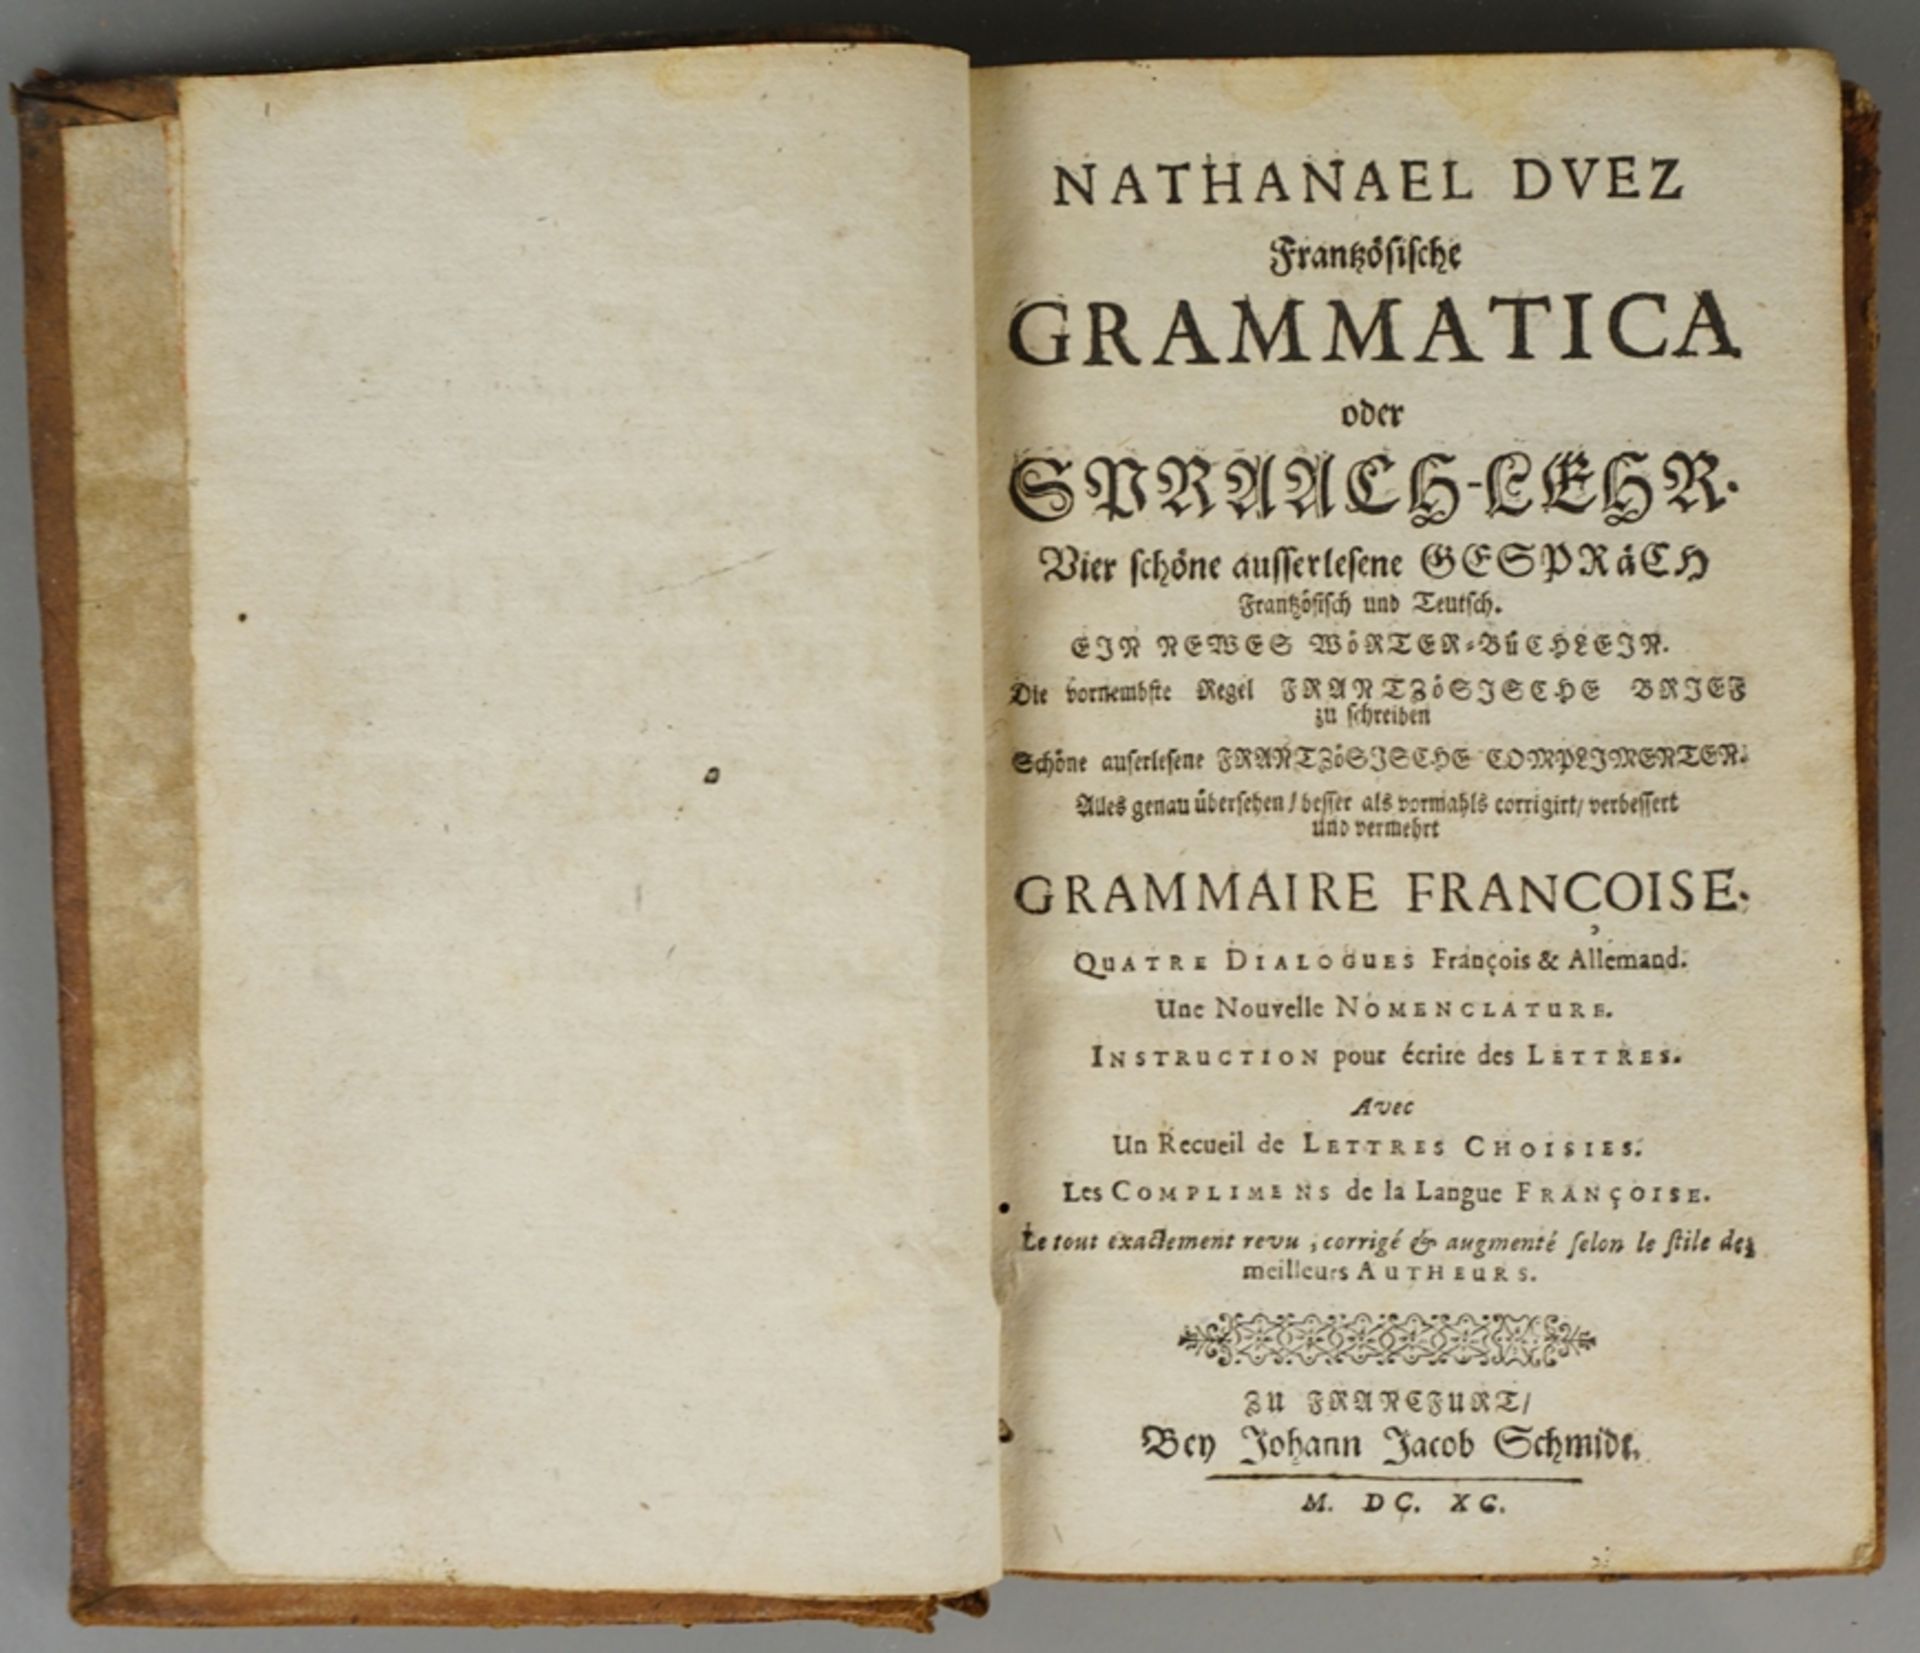 Nathaniel Dvez, Französische Grammatica, bey Johann Jacob Schmidt, zu Frankfurt, 1690